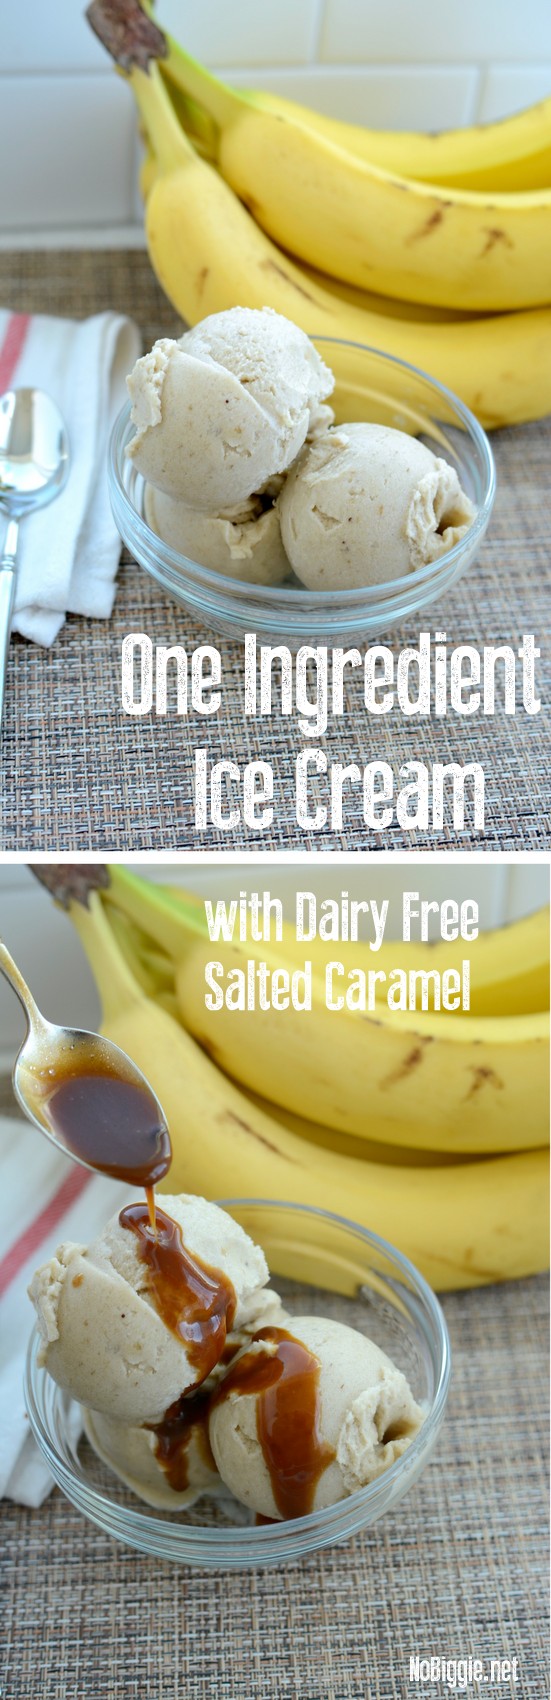 one ingredient ice cream with dairy free salted caramel sauce | NoBiggie.net